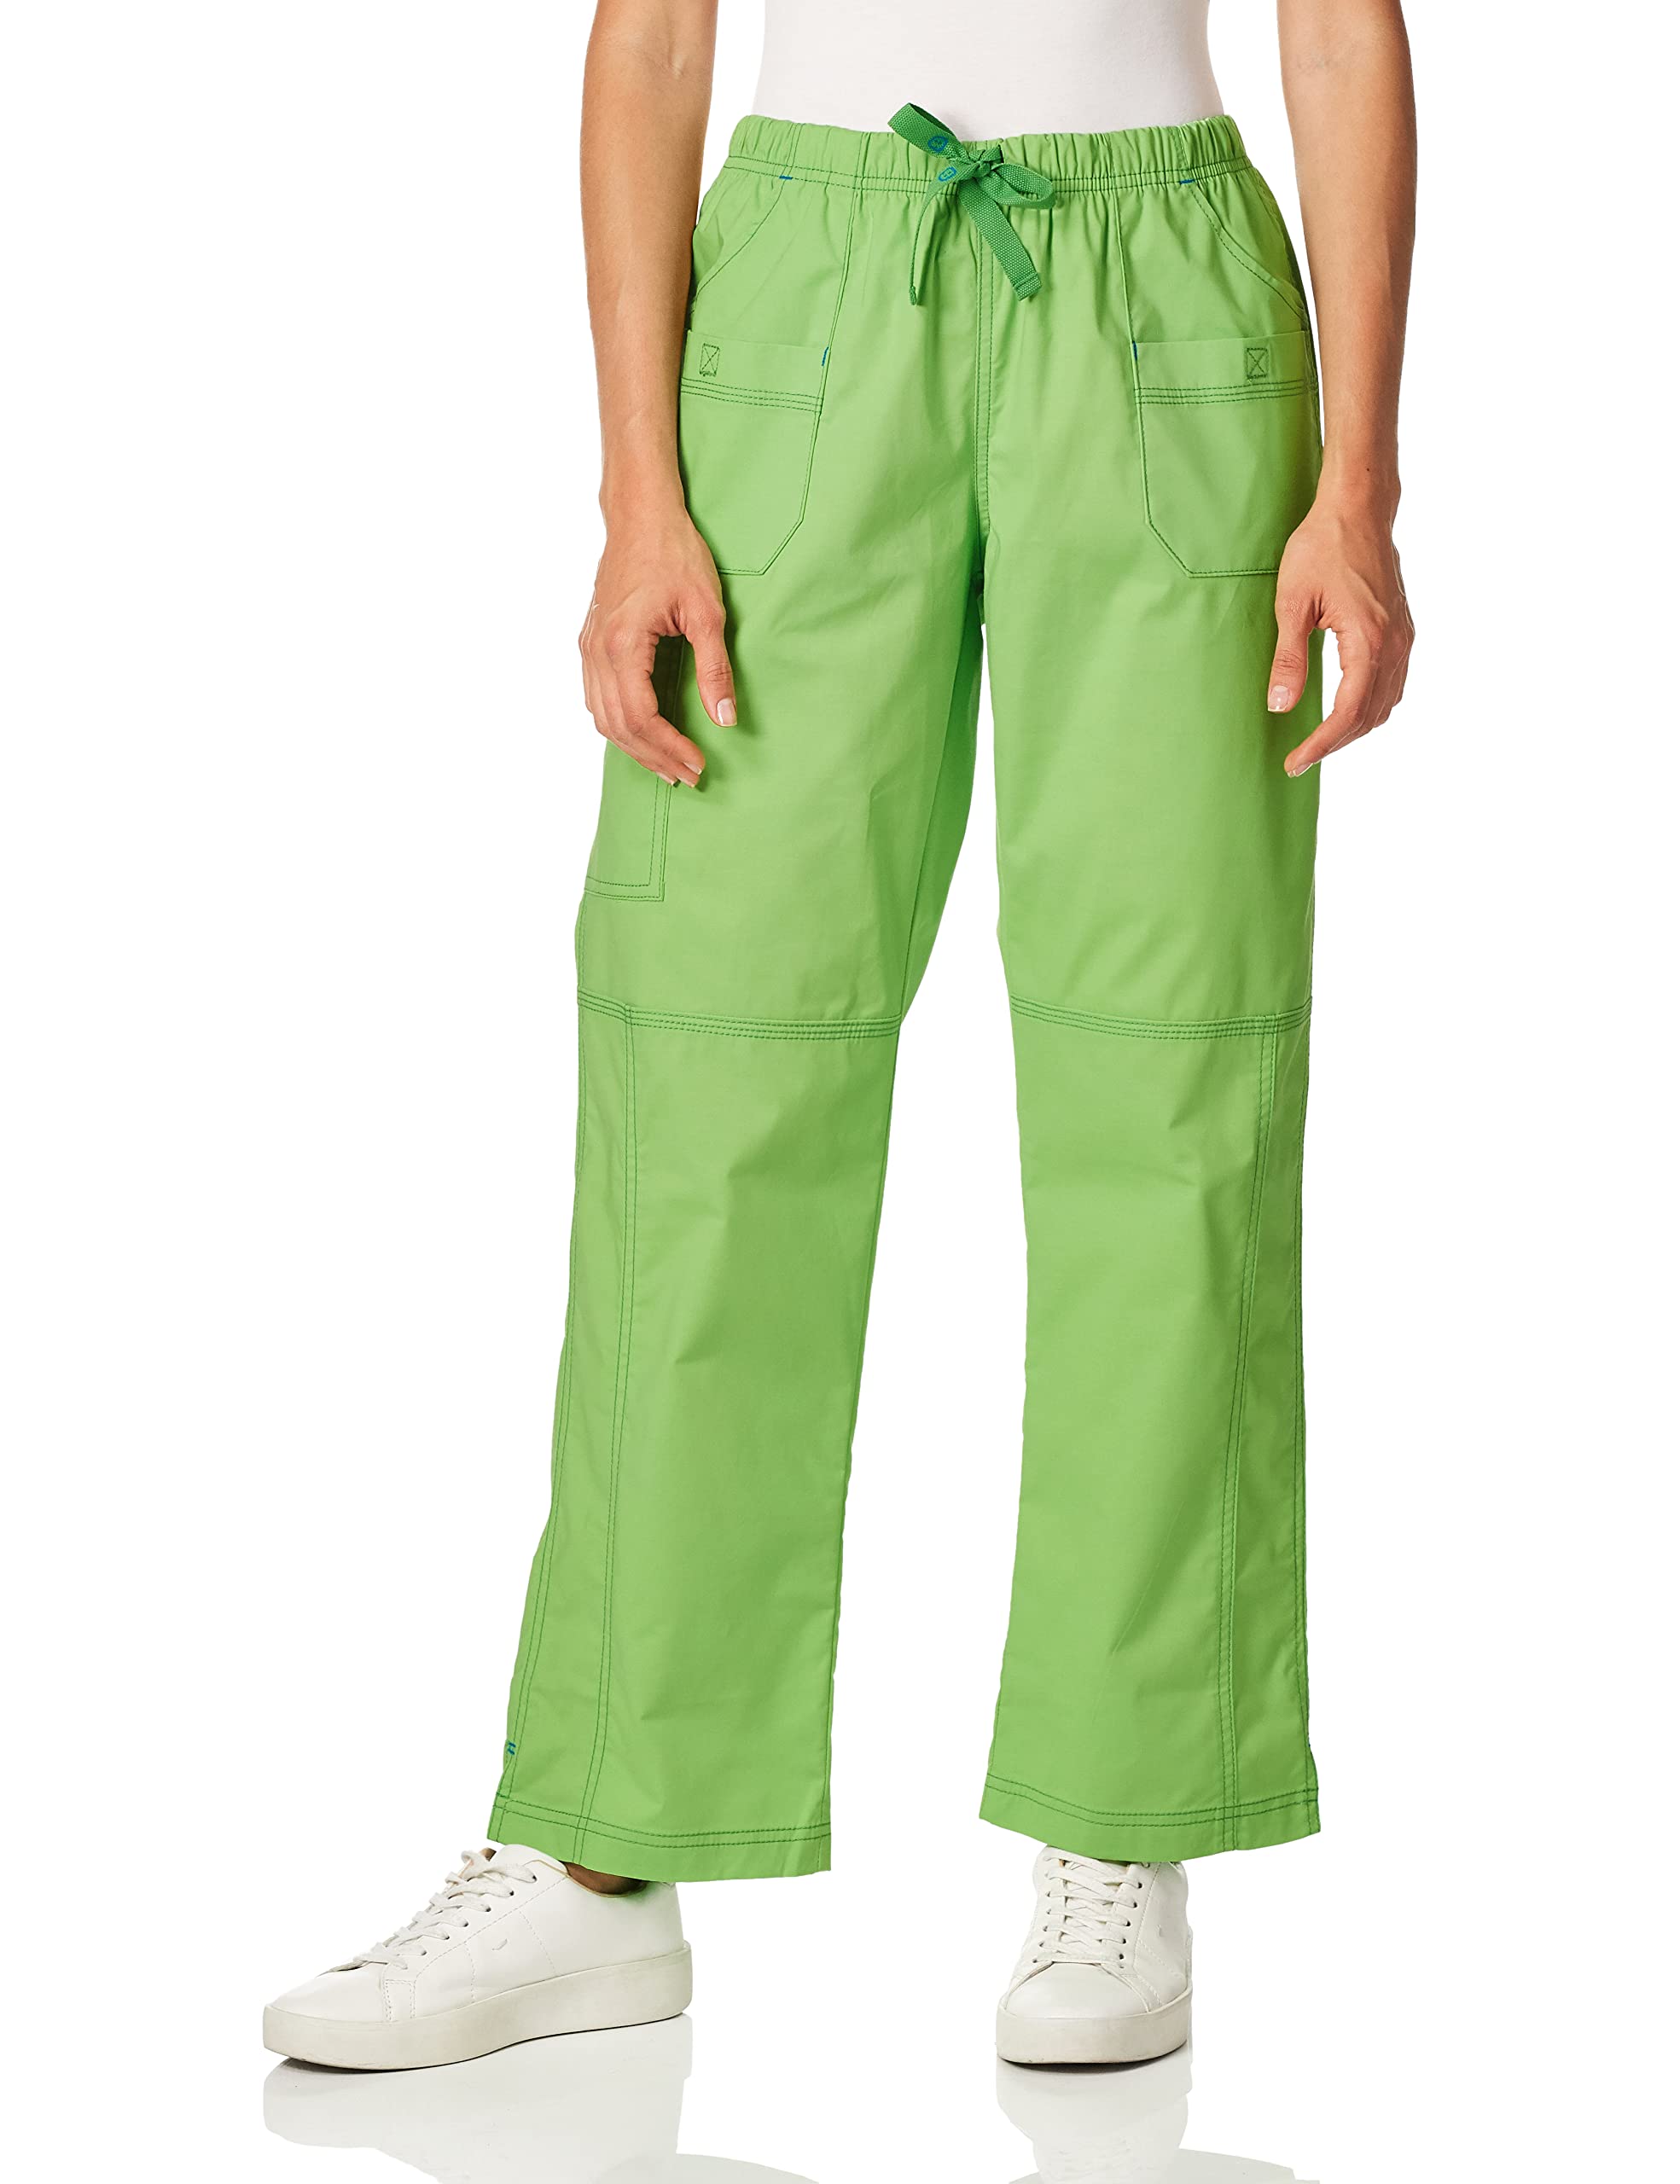 Wonderwink Womens Wonderflex Faith Womens Medical Scrubs Pants, Green Apple, 3X-Large Petite Us